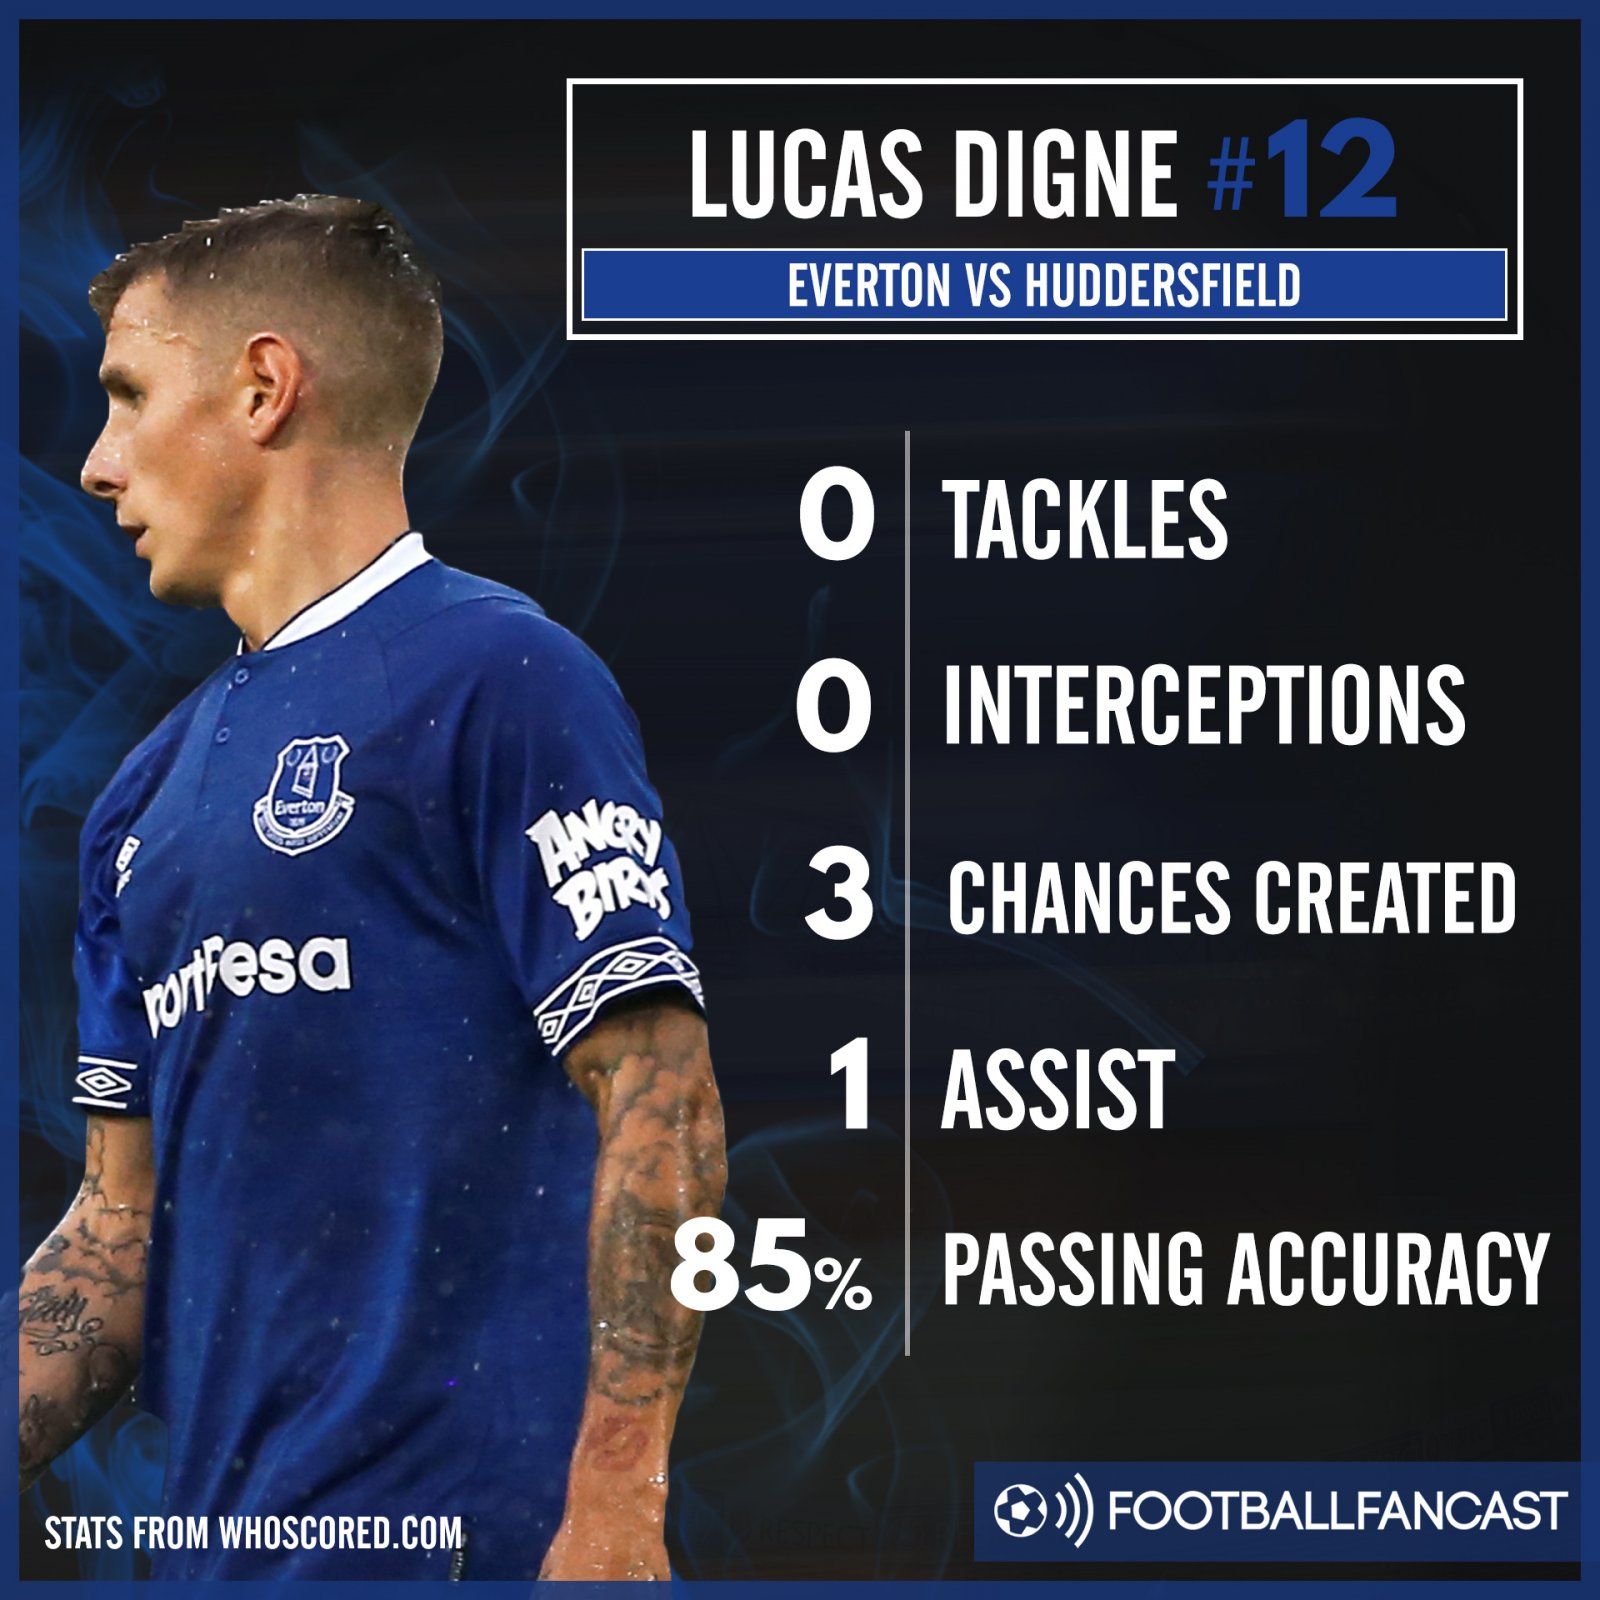 Lucas Digne's stats vs Huddersfield